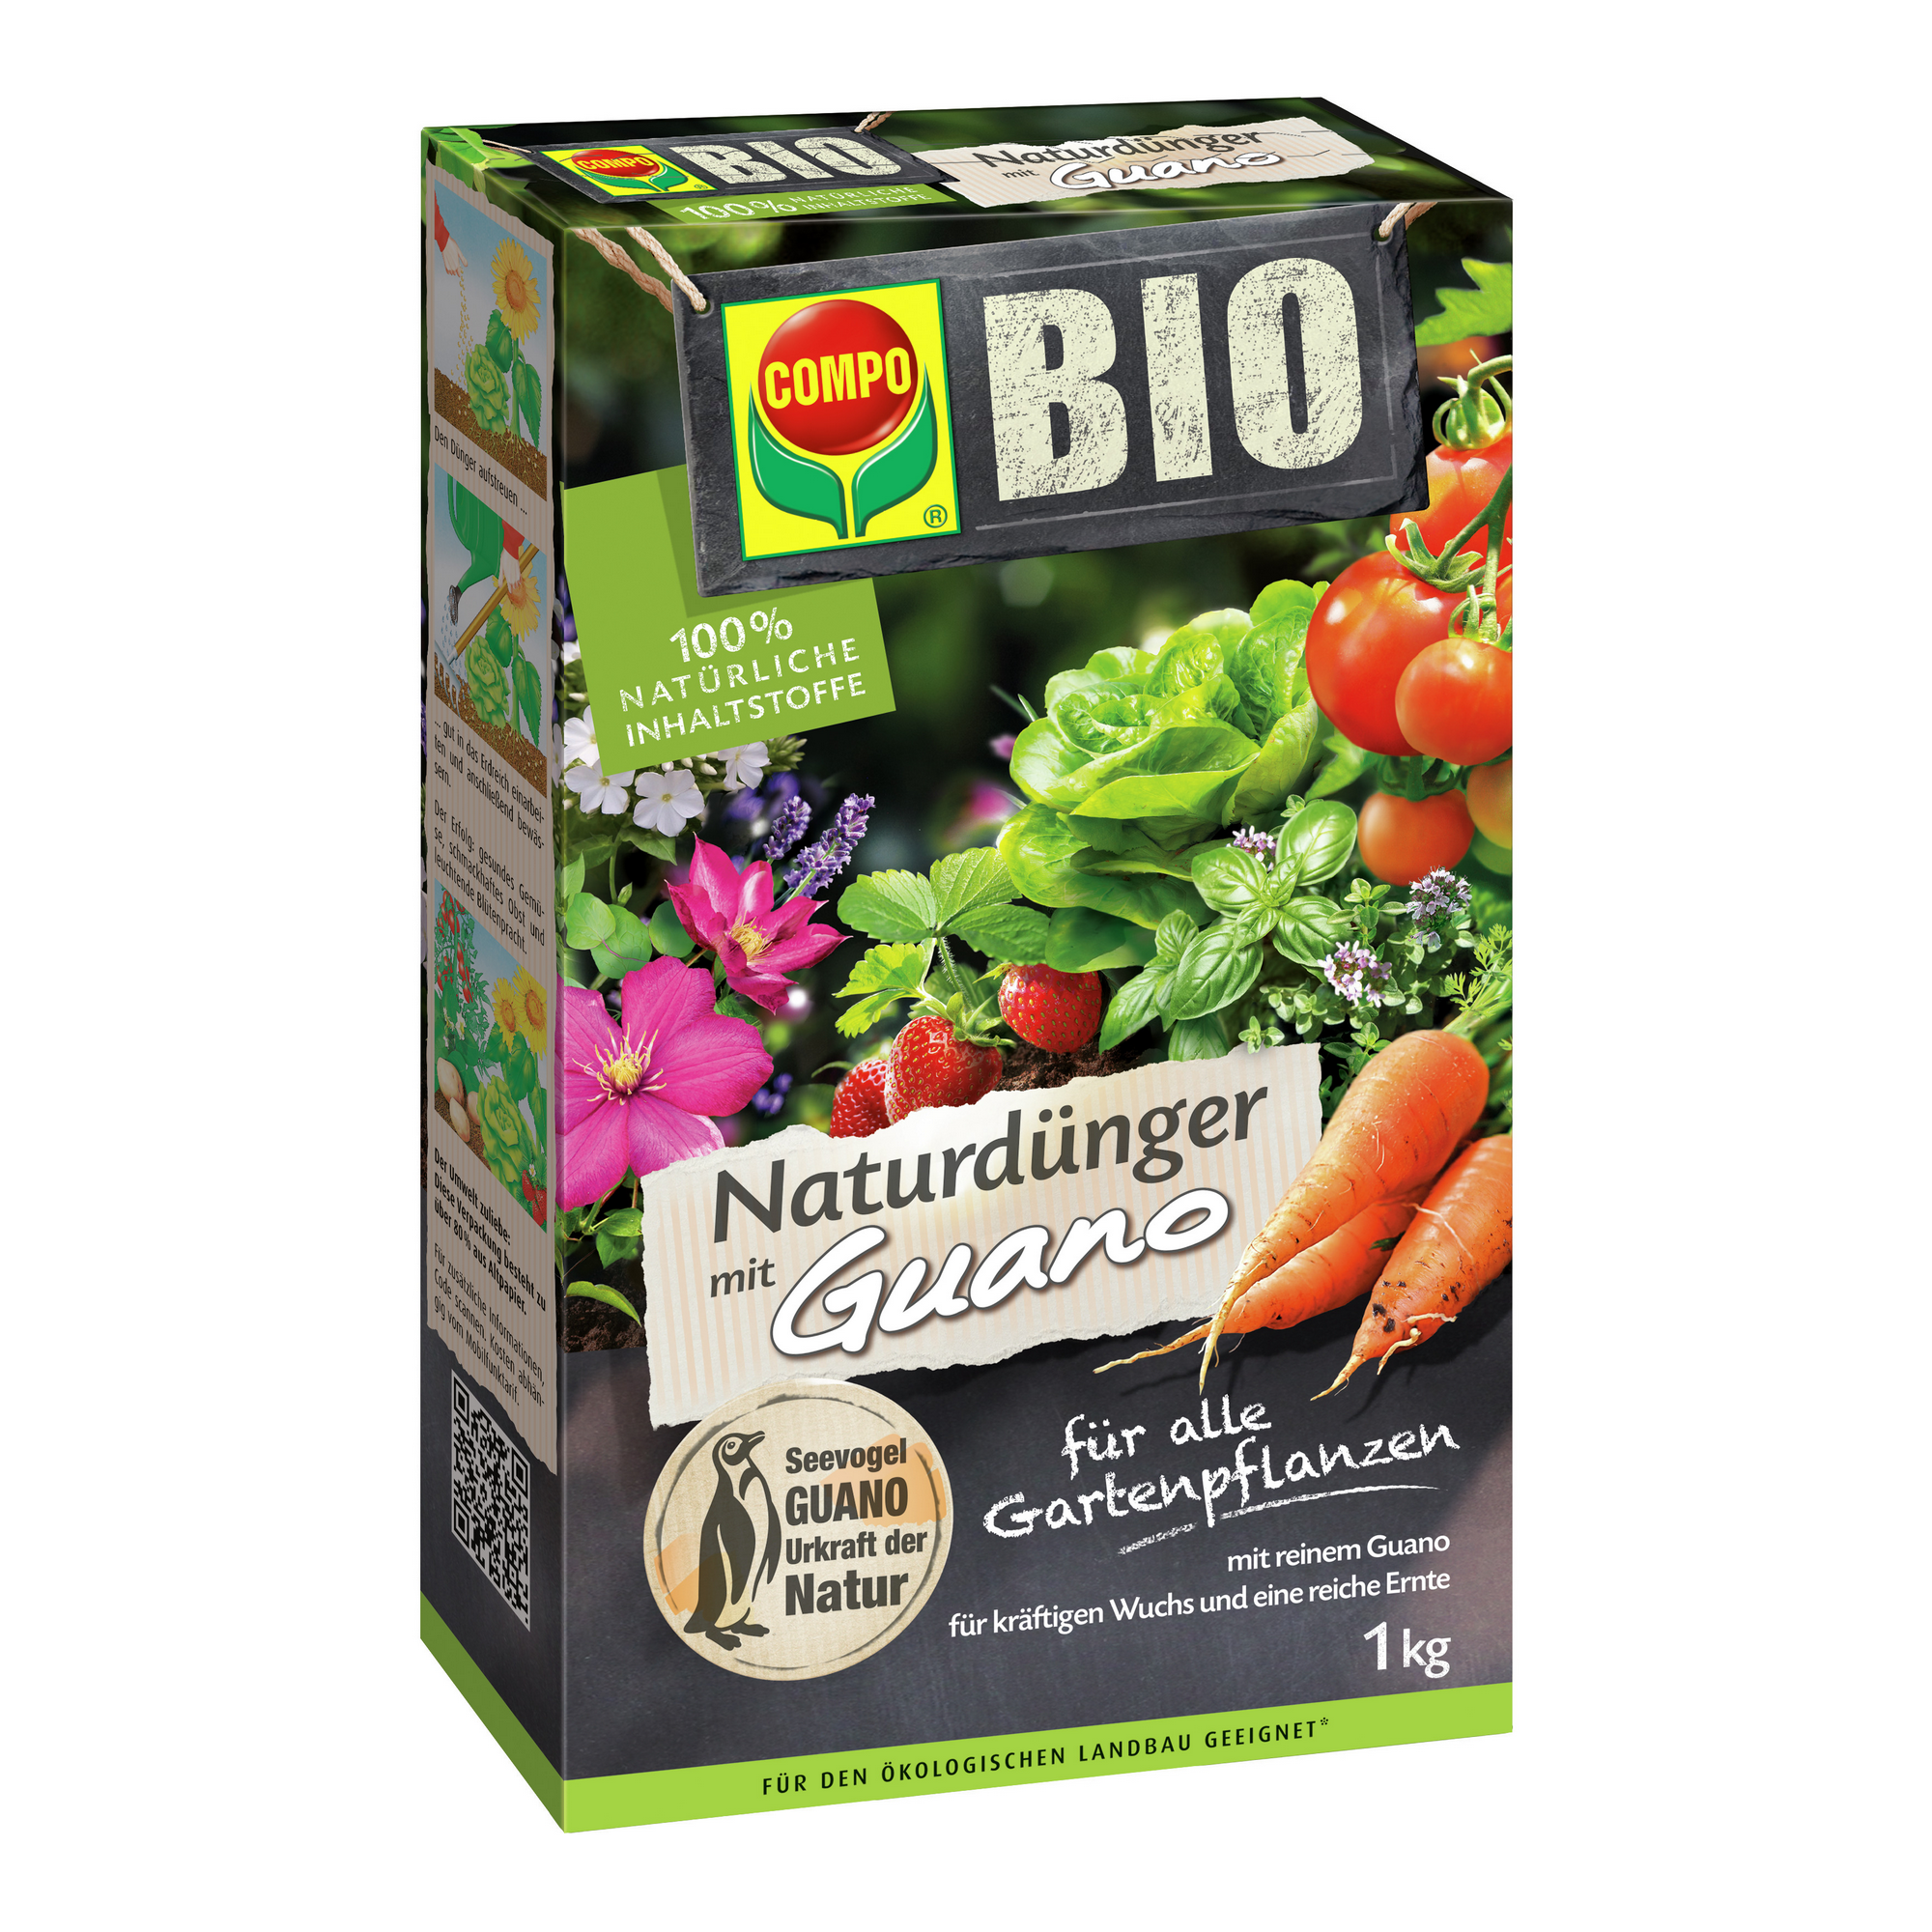 Bio-Naturdünger mit Guano 1 kg + product picture